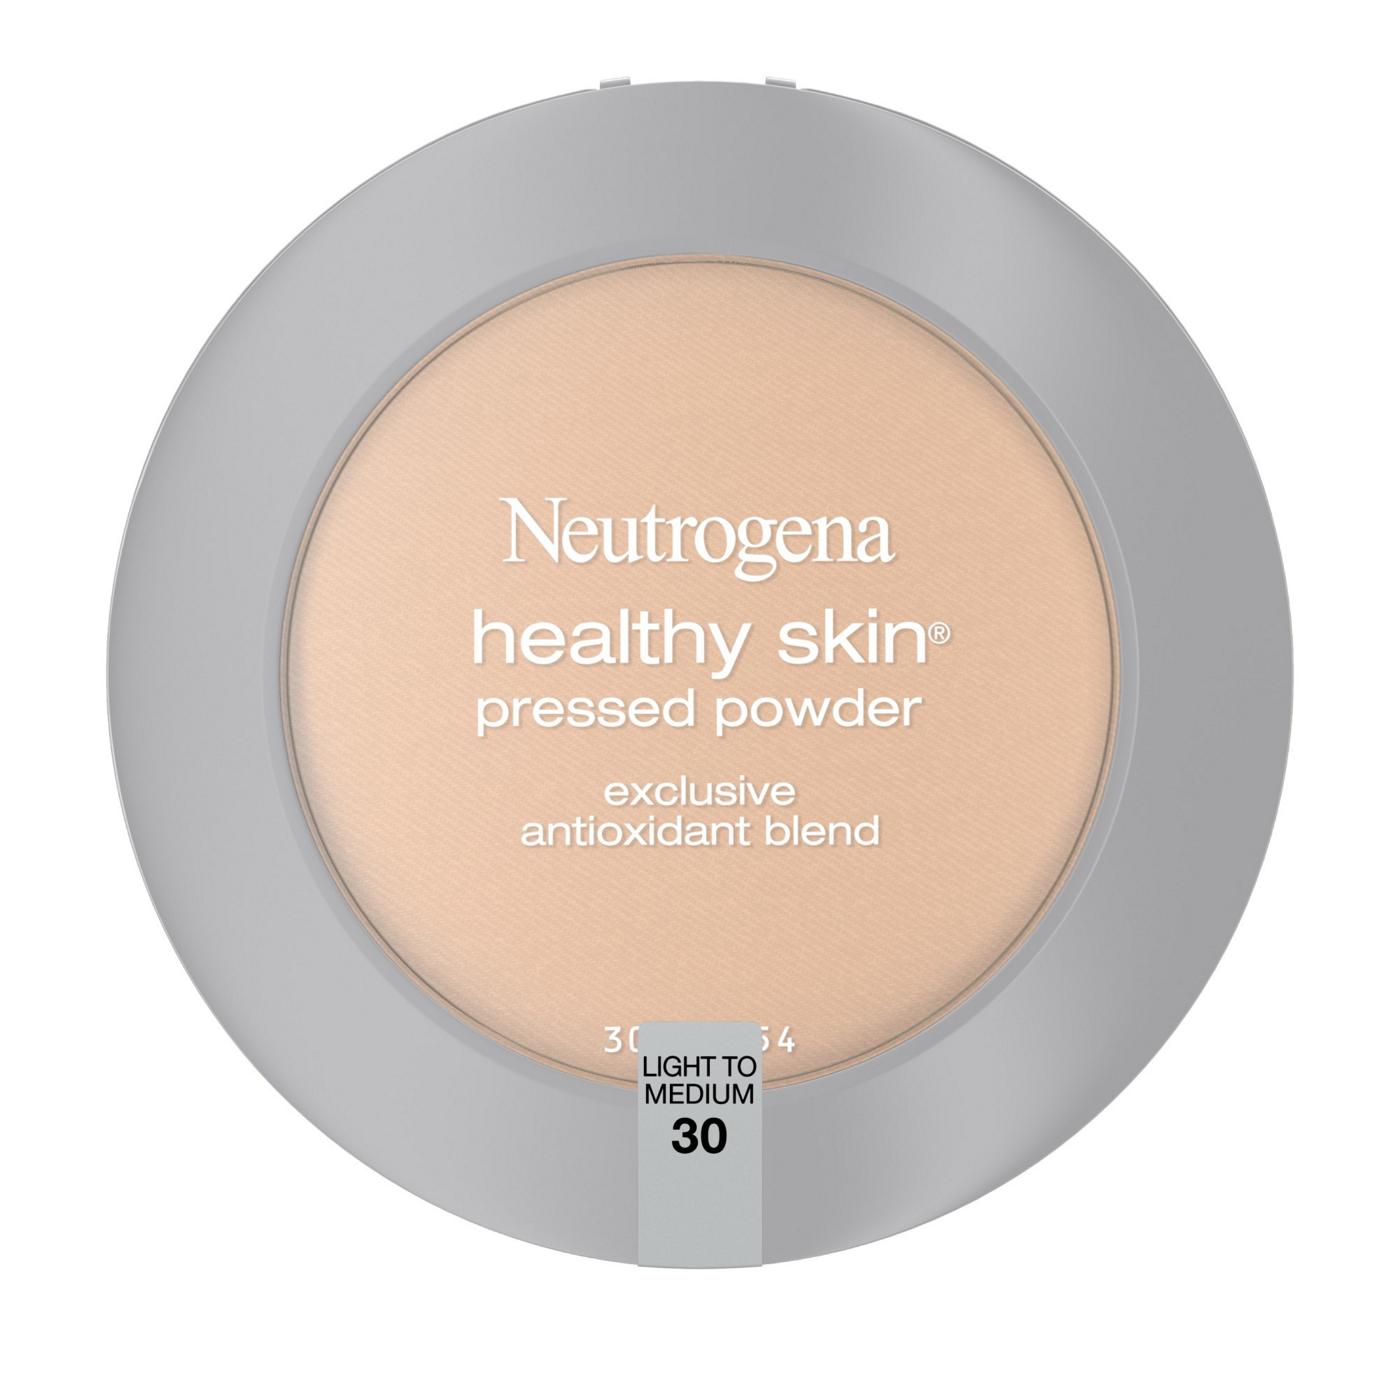 Neutrogena Healthy Skin Pressed Powder 30 Light To Medium; image 1 of 5